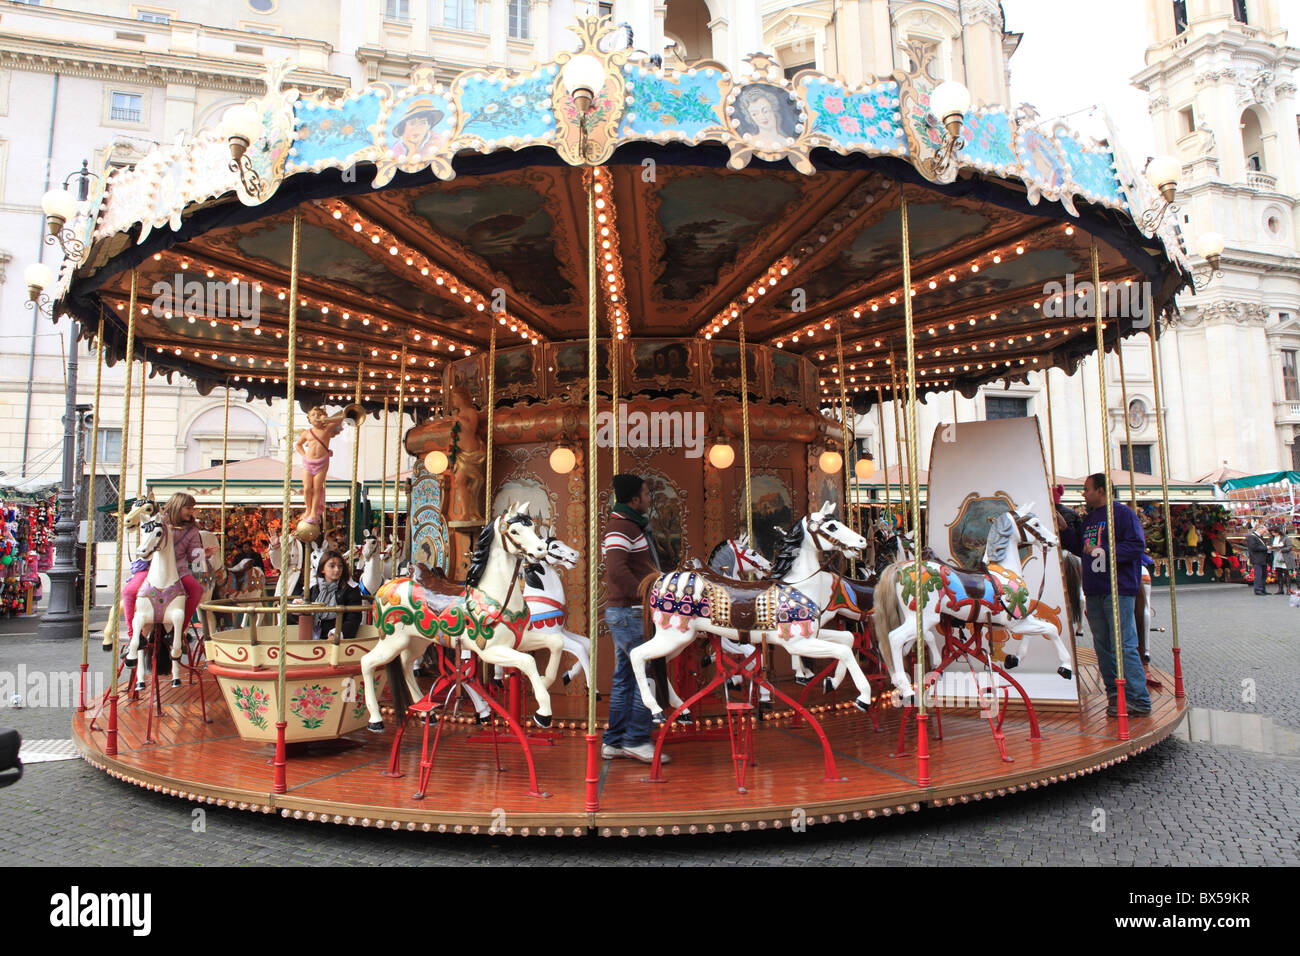 Merry go round in Italian city square, Rome Stock Photo